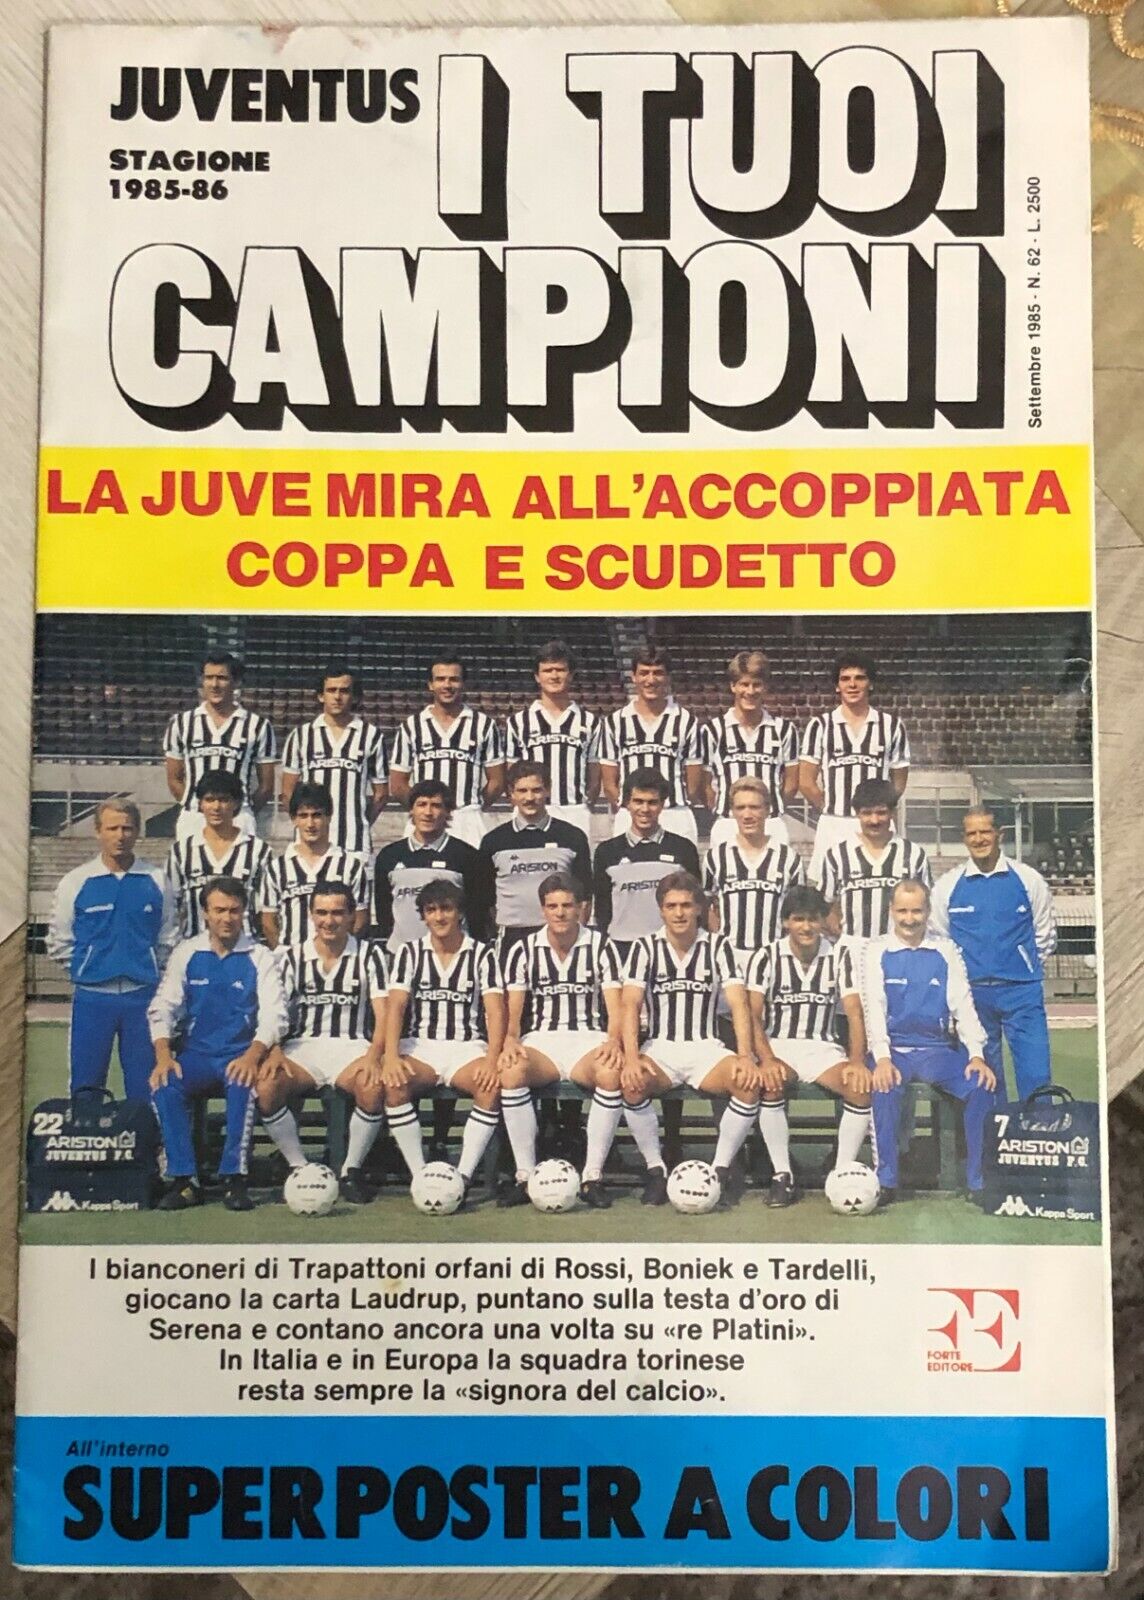 Juventus I tuoi campioni 1985-86 n. 62/1985 di Aa.vv.,  1985,  Forte Editore Mil